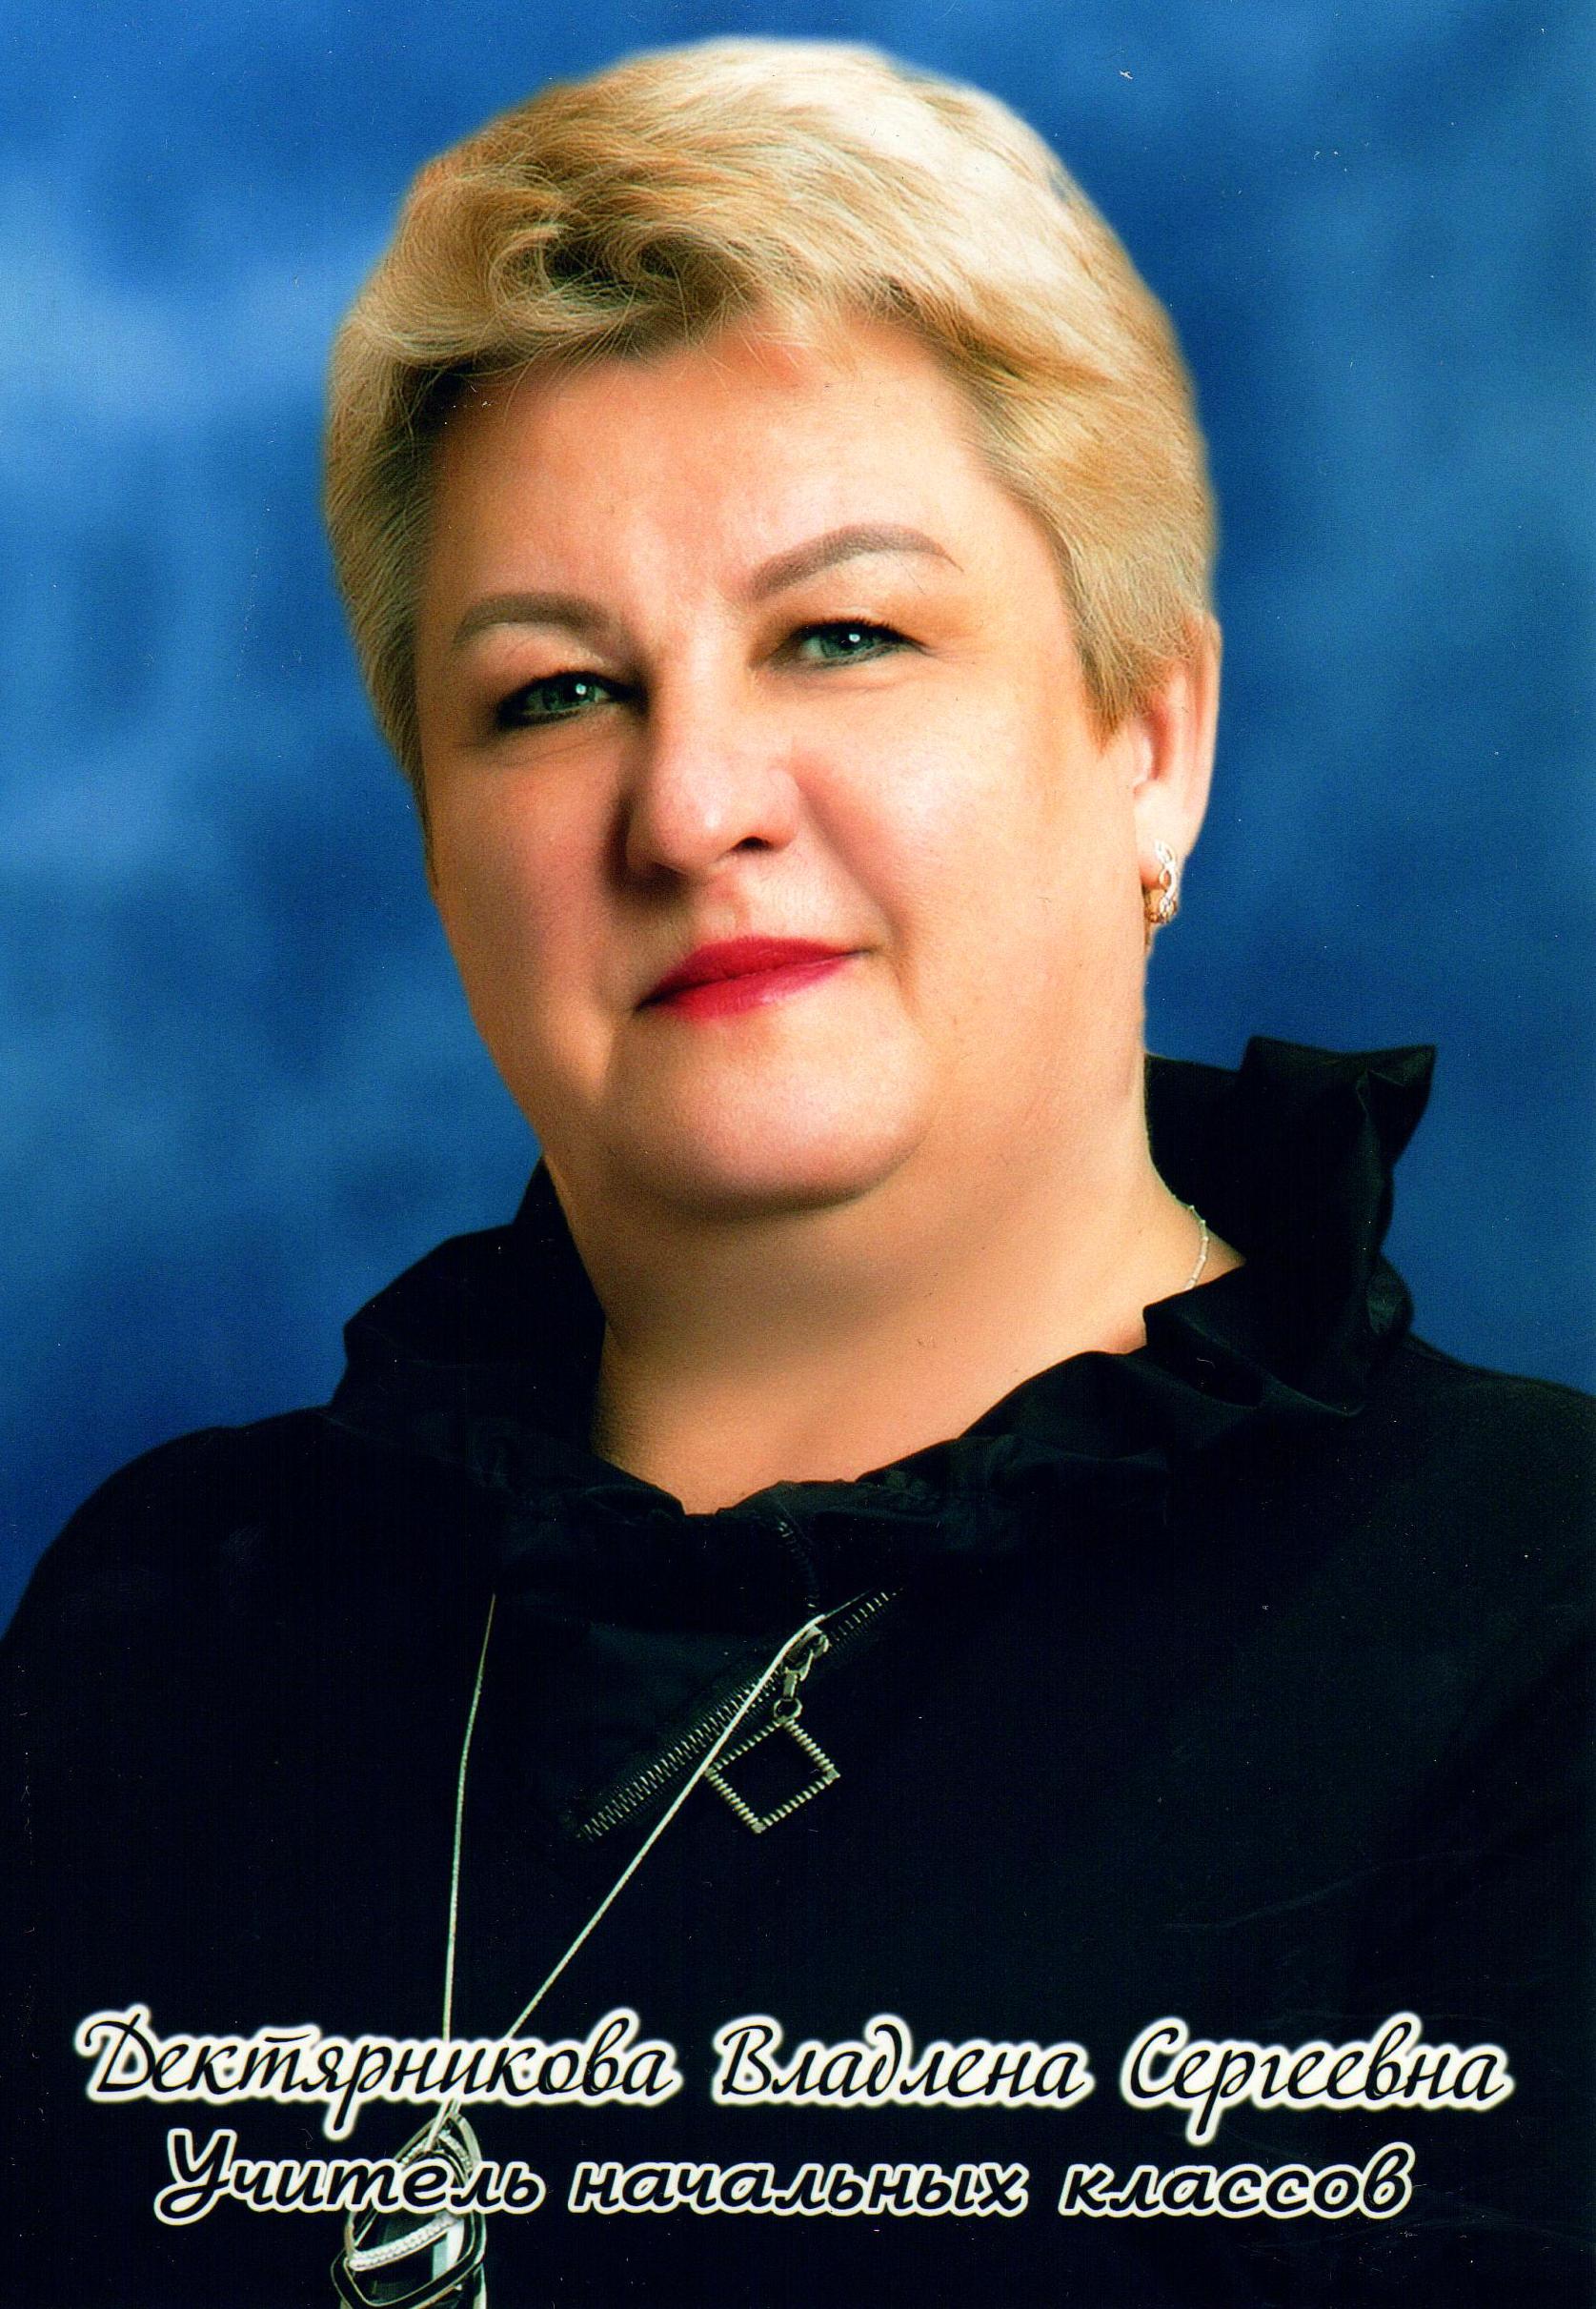 Дектярникова Владлена Сергеевна.